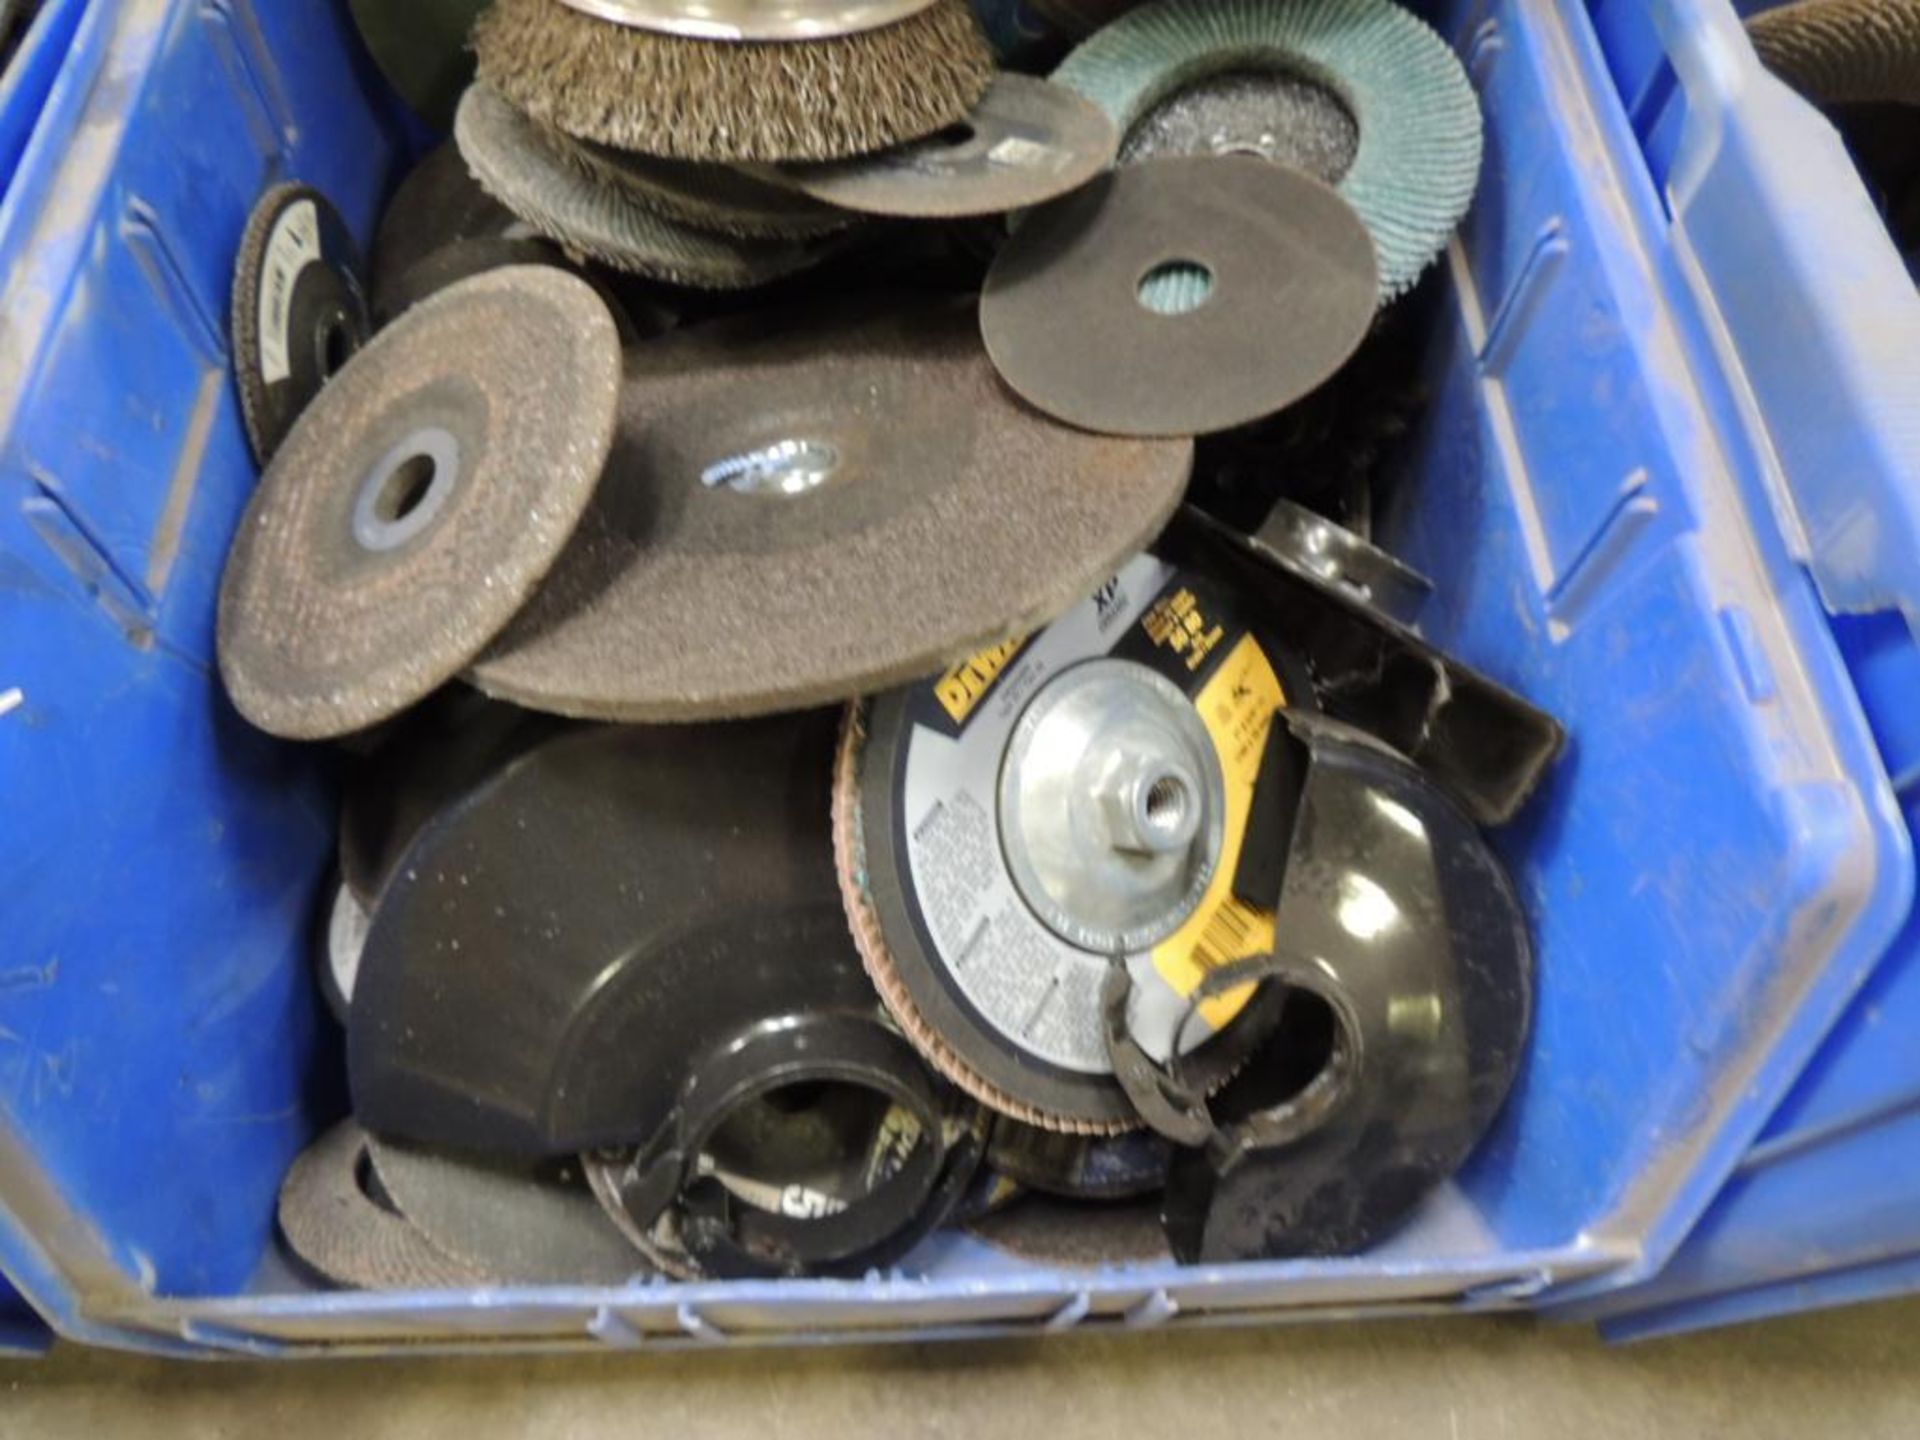 LOT: Assorted Grinding Discs, Cut-off Discs, Sanding Discs & Wire Wheels in Assorted Sizes